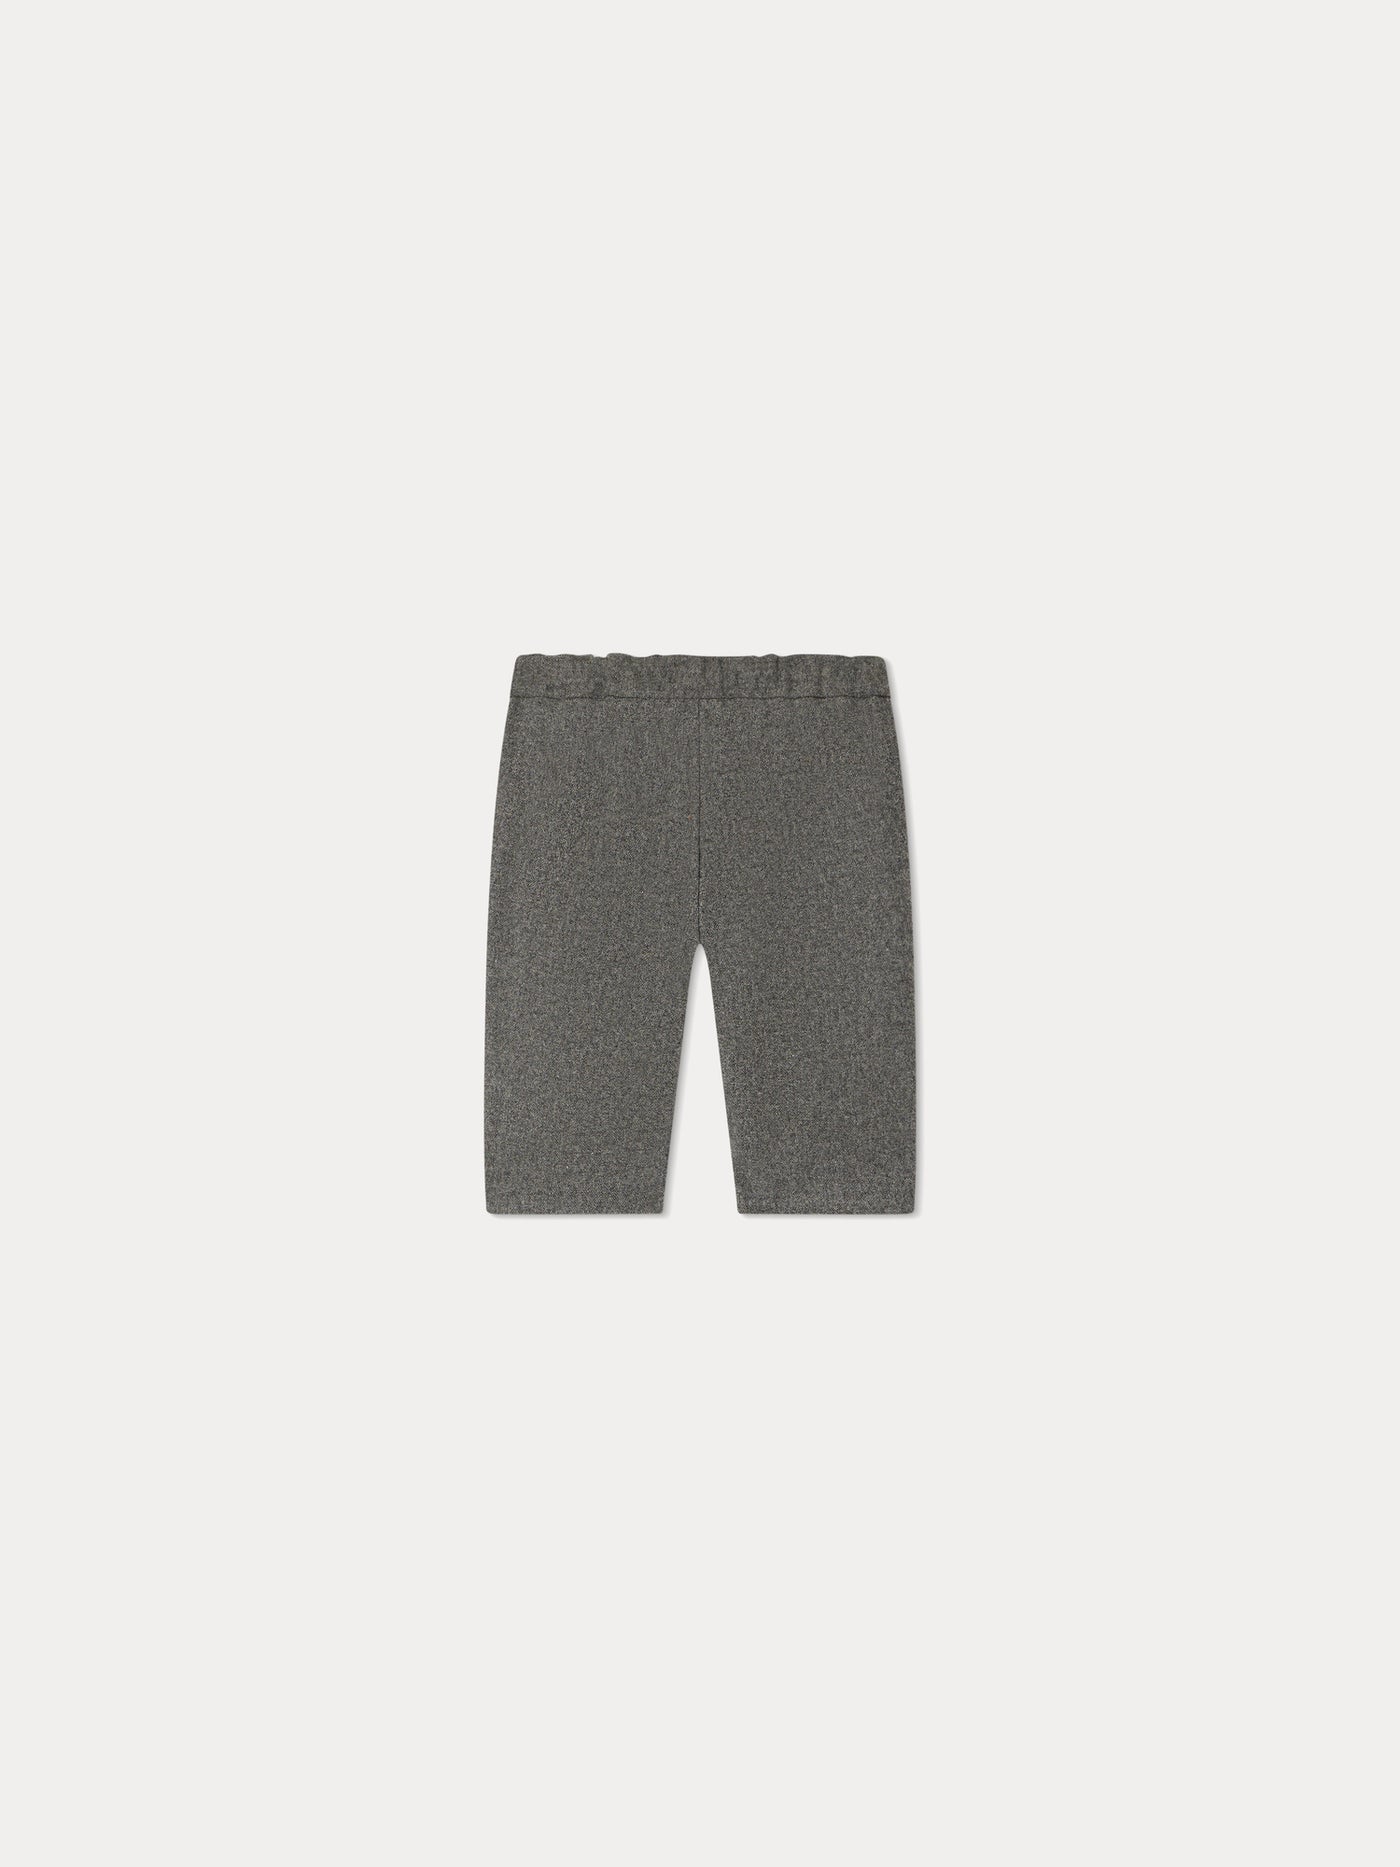 Thursday Pants dark heathered gray